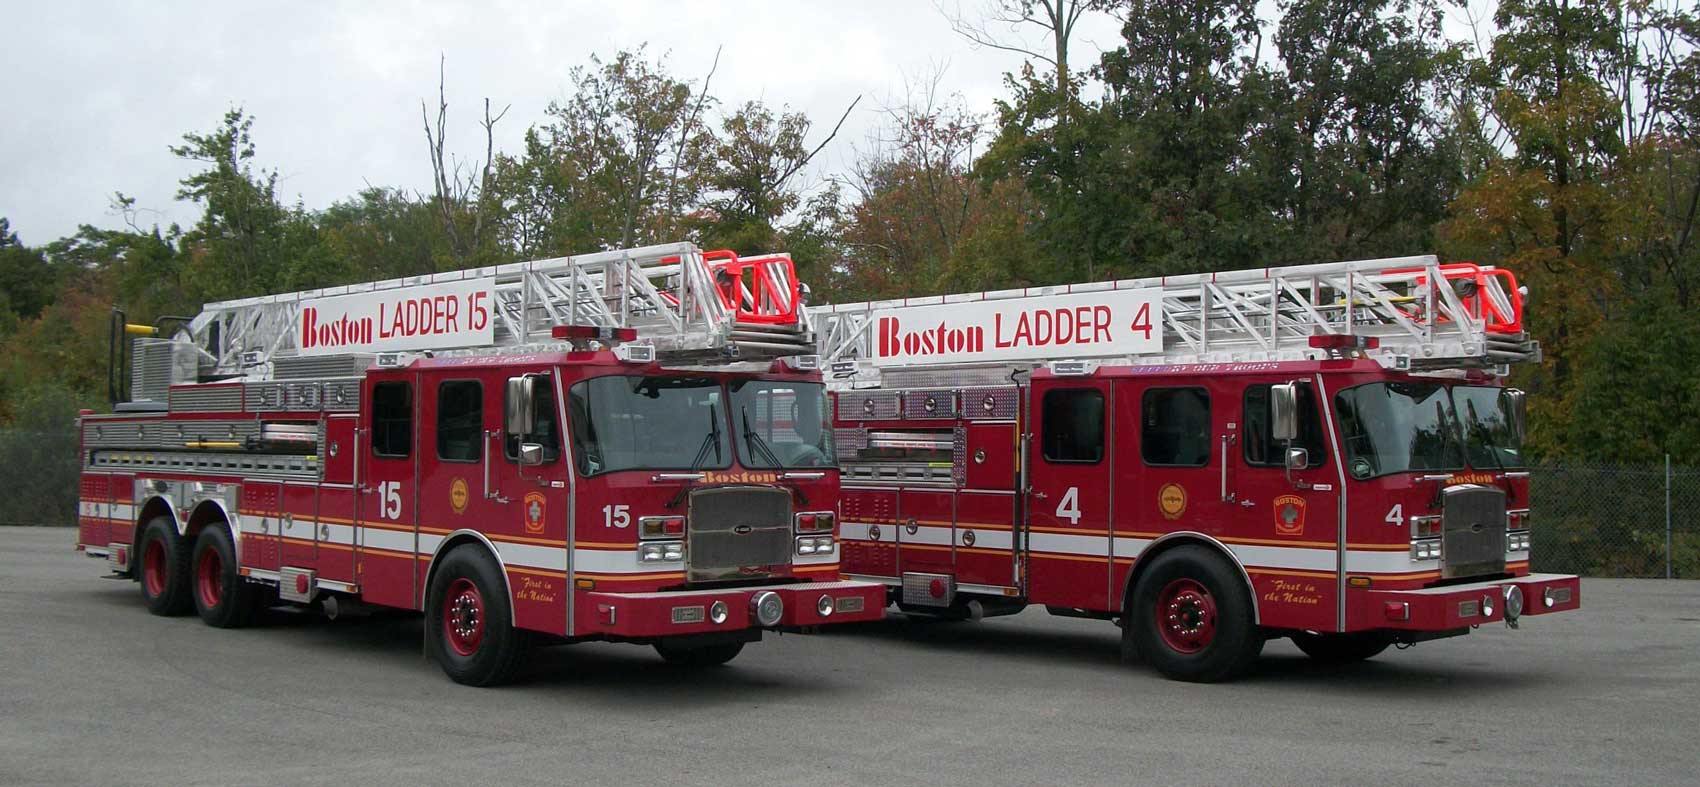 Boston, MA - E-One Ladder 15 and Ladder 4